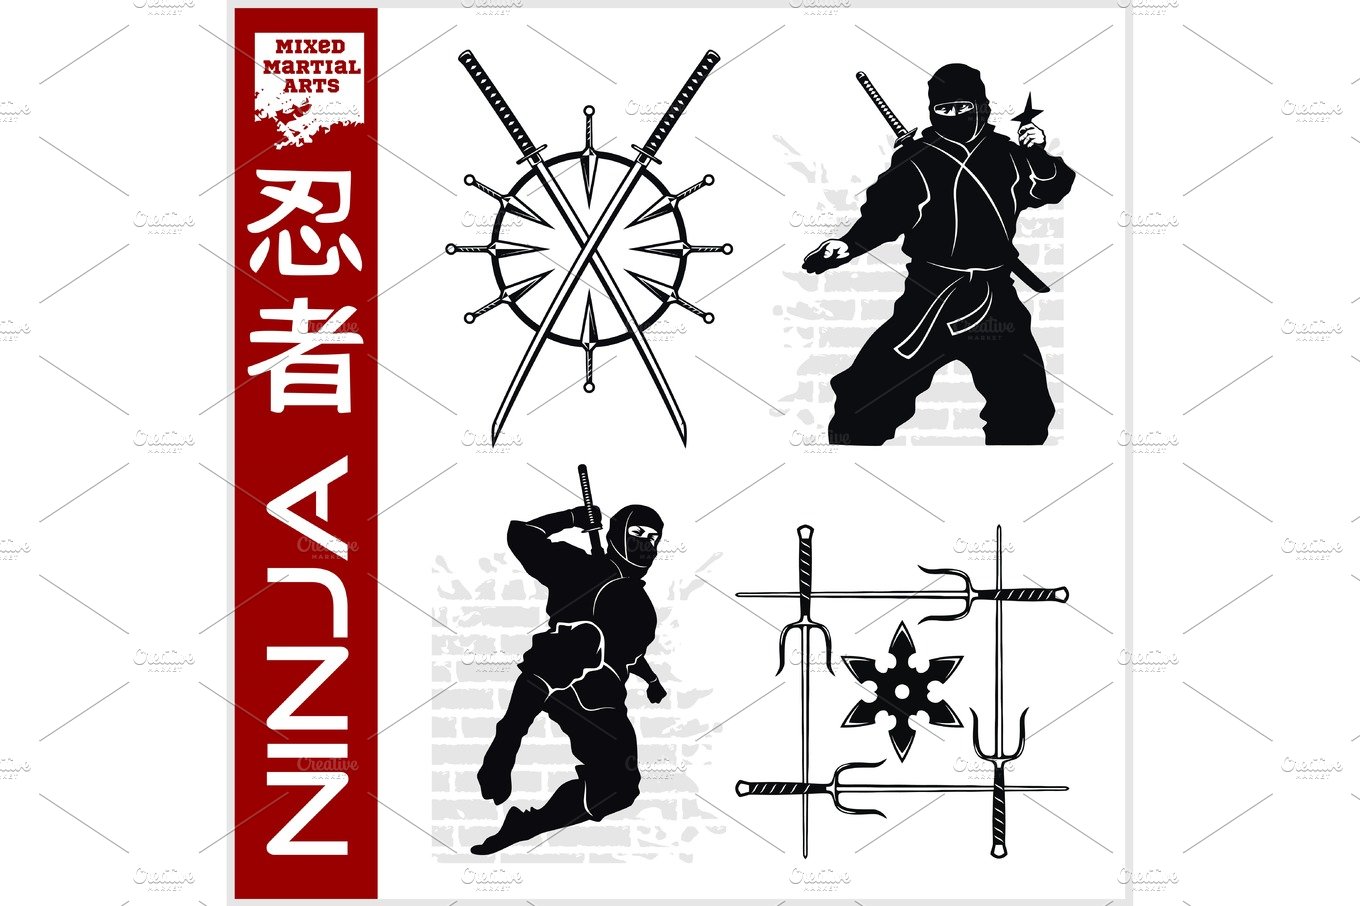 Ninja Warrior Fighter - Mixed Martial Art cover image.